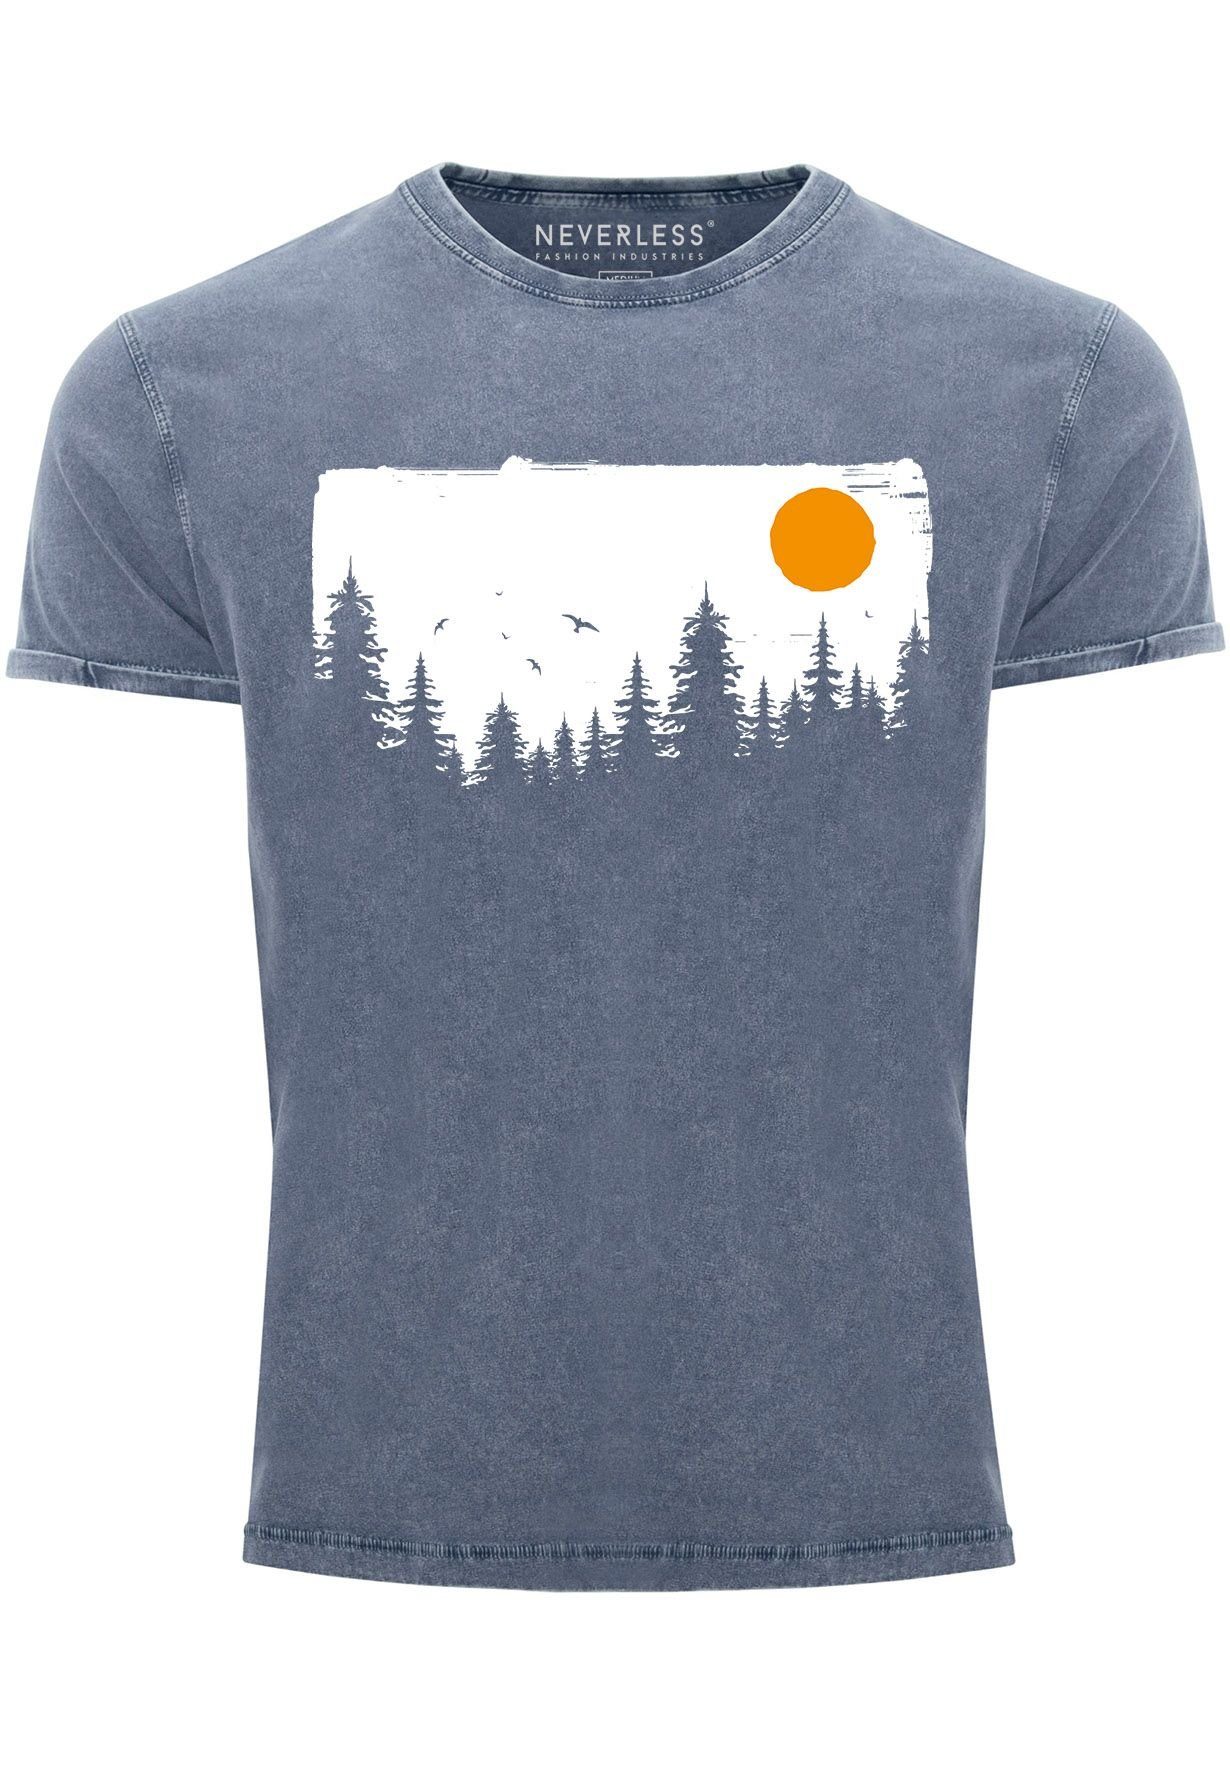 Neverless Print-Shirt Herren Vintage blau Abenteuer Adventure Natur-Lieb mit Print Bäume Wald Shirt Outdoor